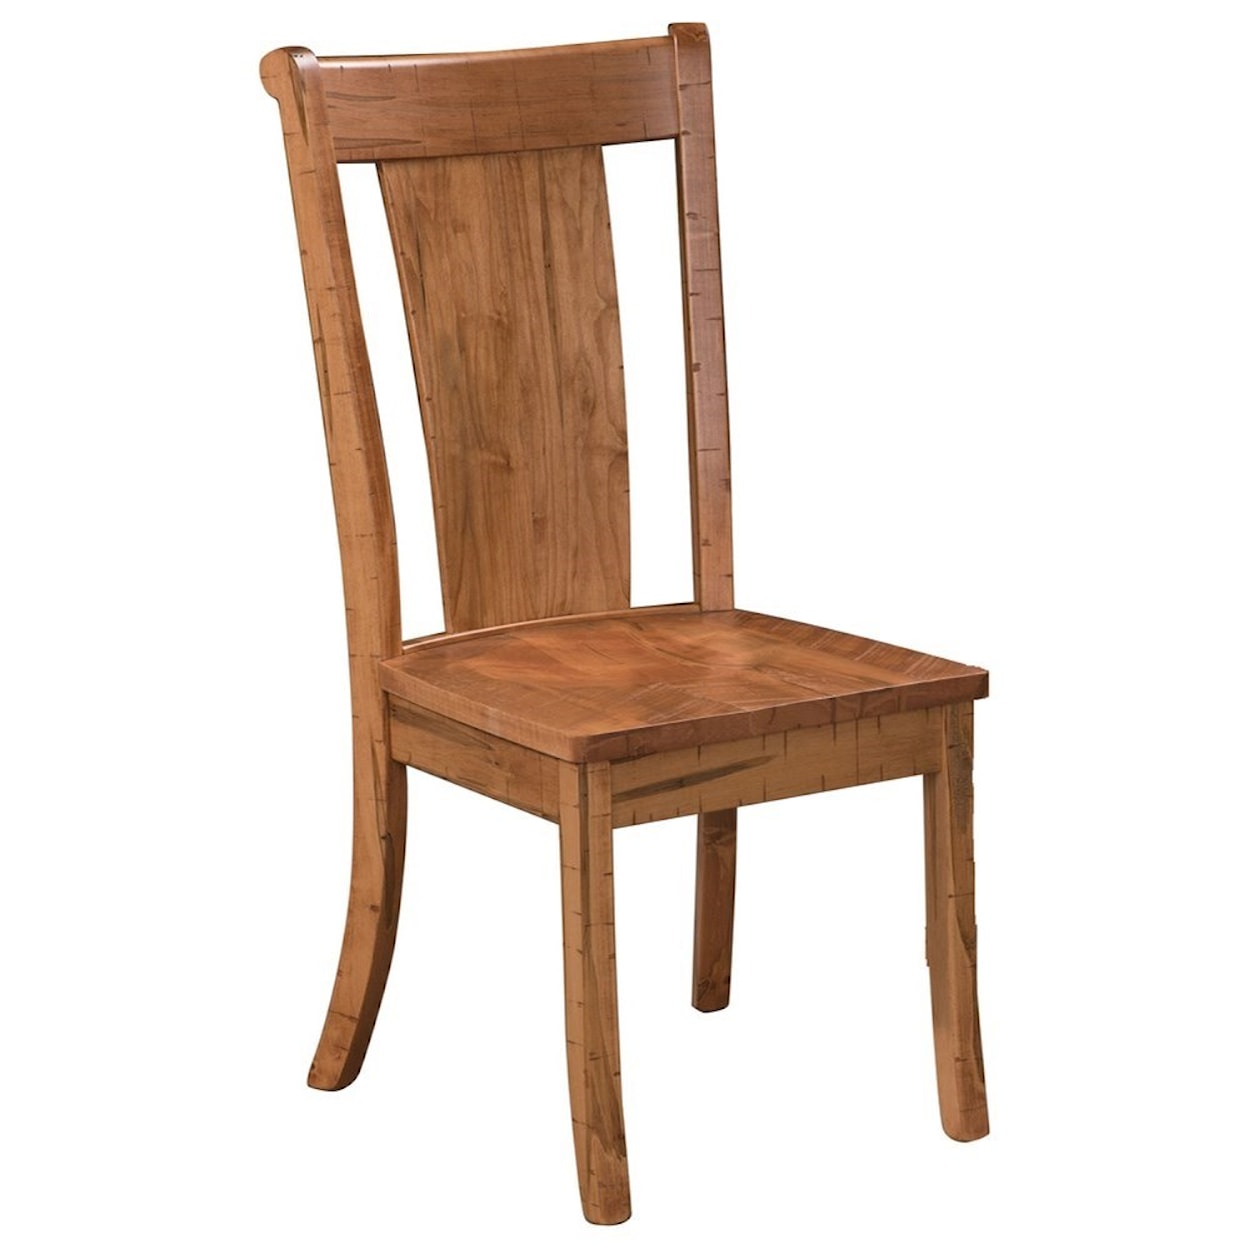 Weaver Woodcraft Williamsburg Customizable Dining Chair